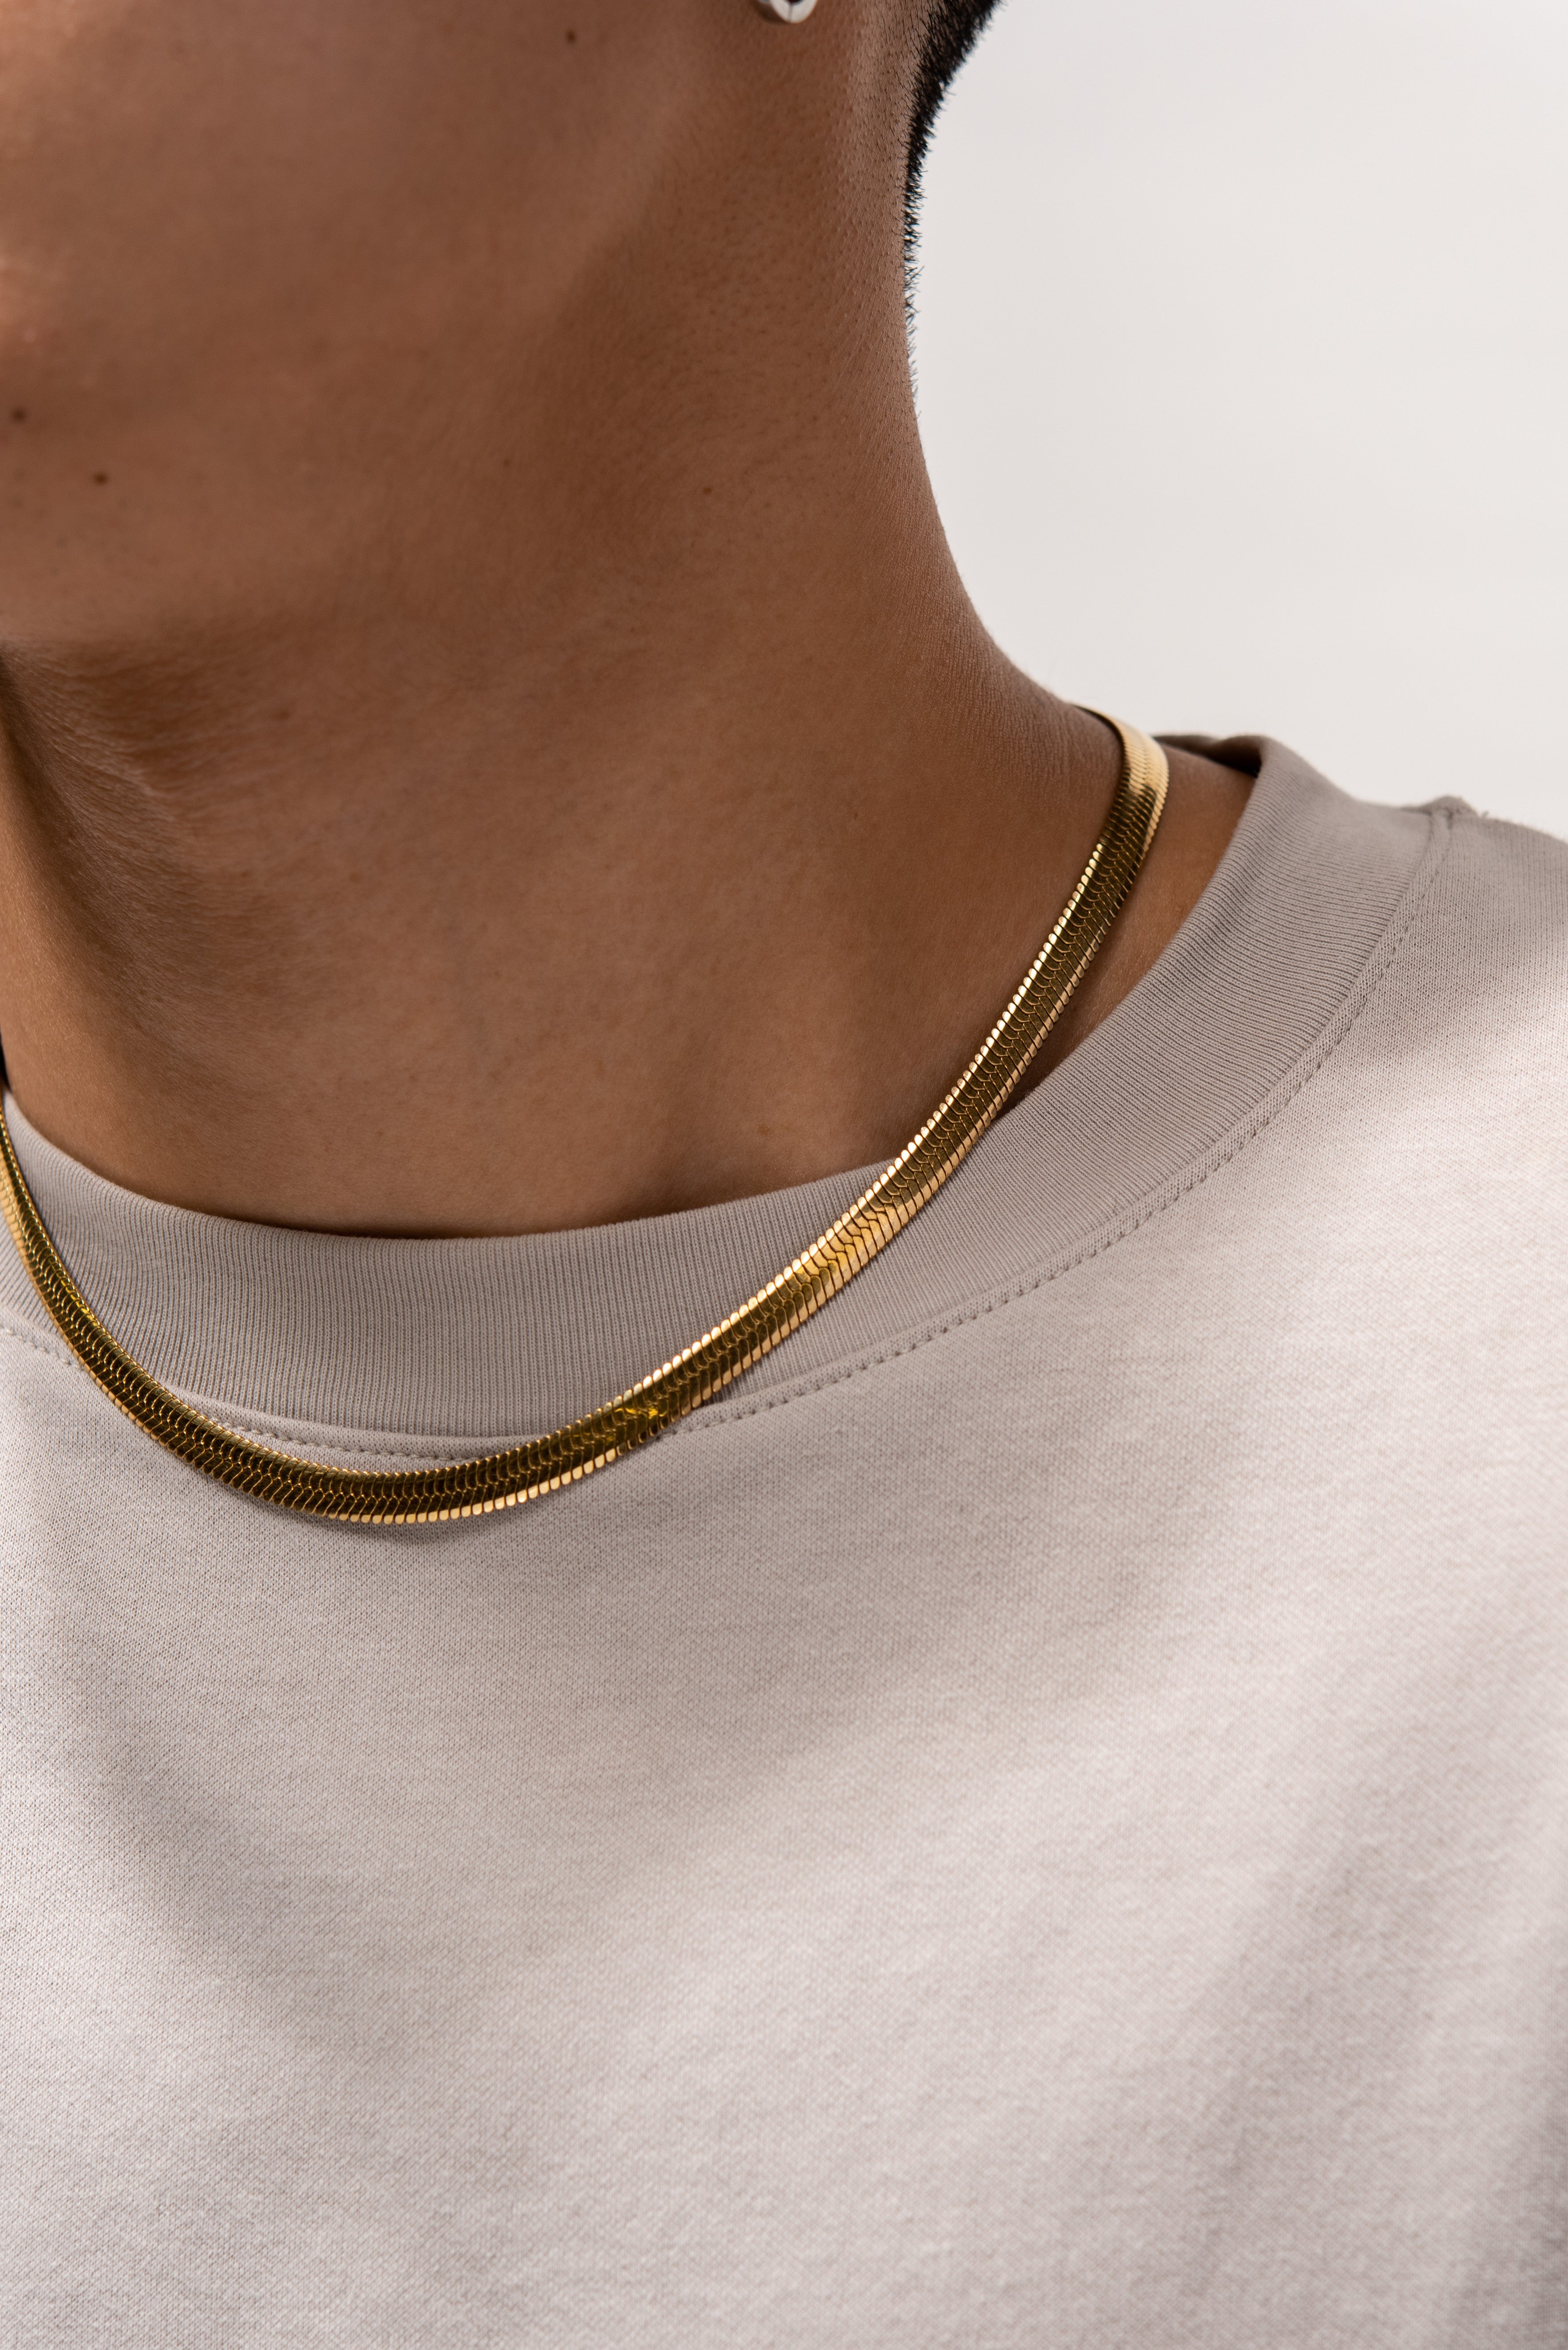 Nuragold 14k Yellow Gold 5mm Solid Herringbone Silky Flat High Polish Chain  Necklace, Mens Womens Jewelry 14